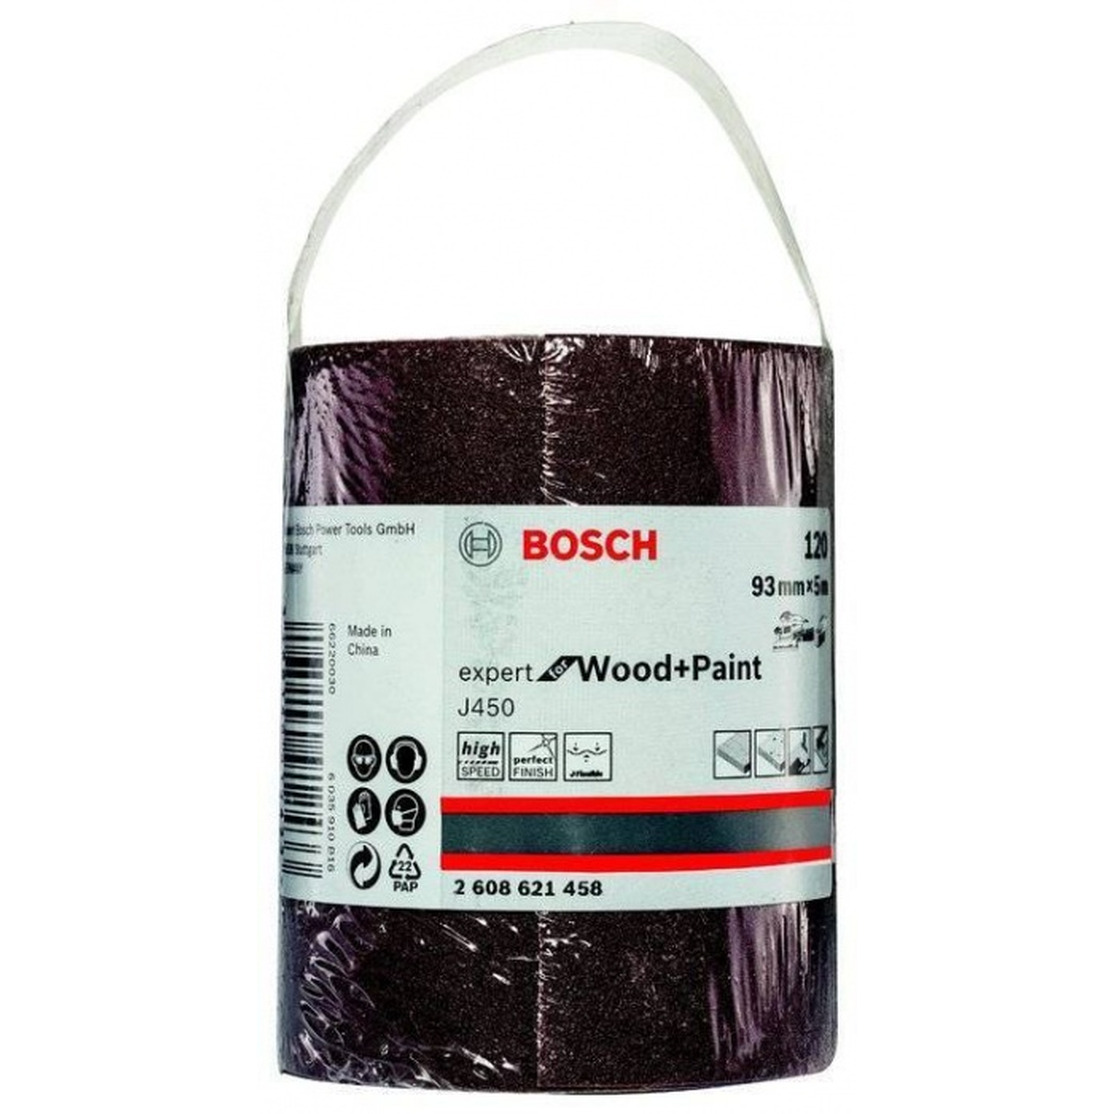 Шлифлисты Bosch J450 5м*93мм 2608621458